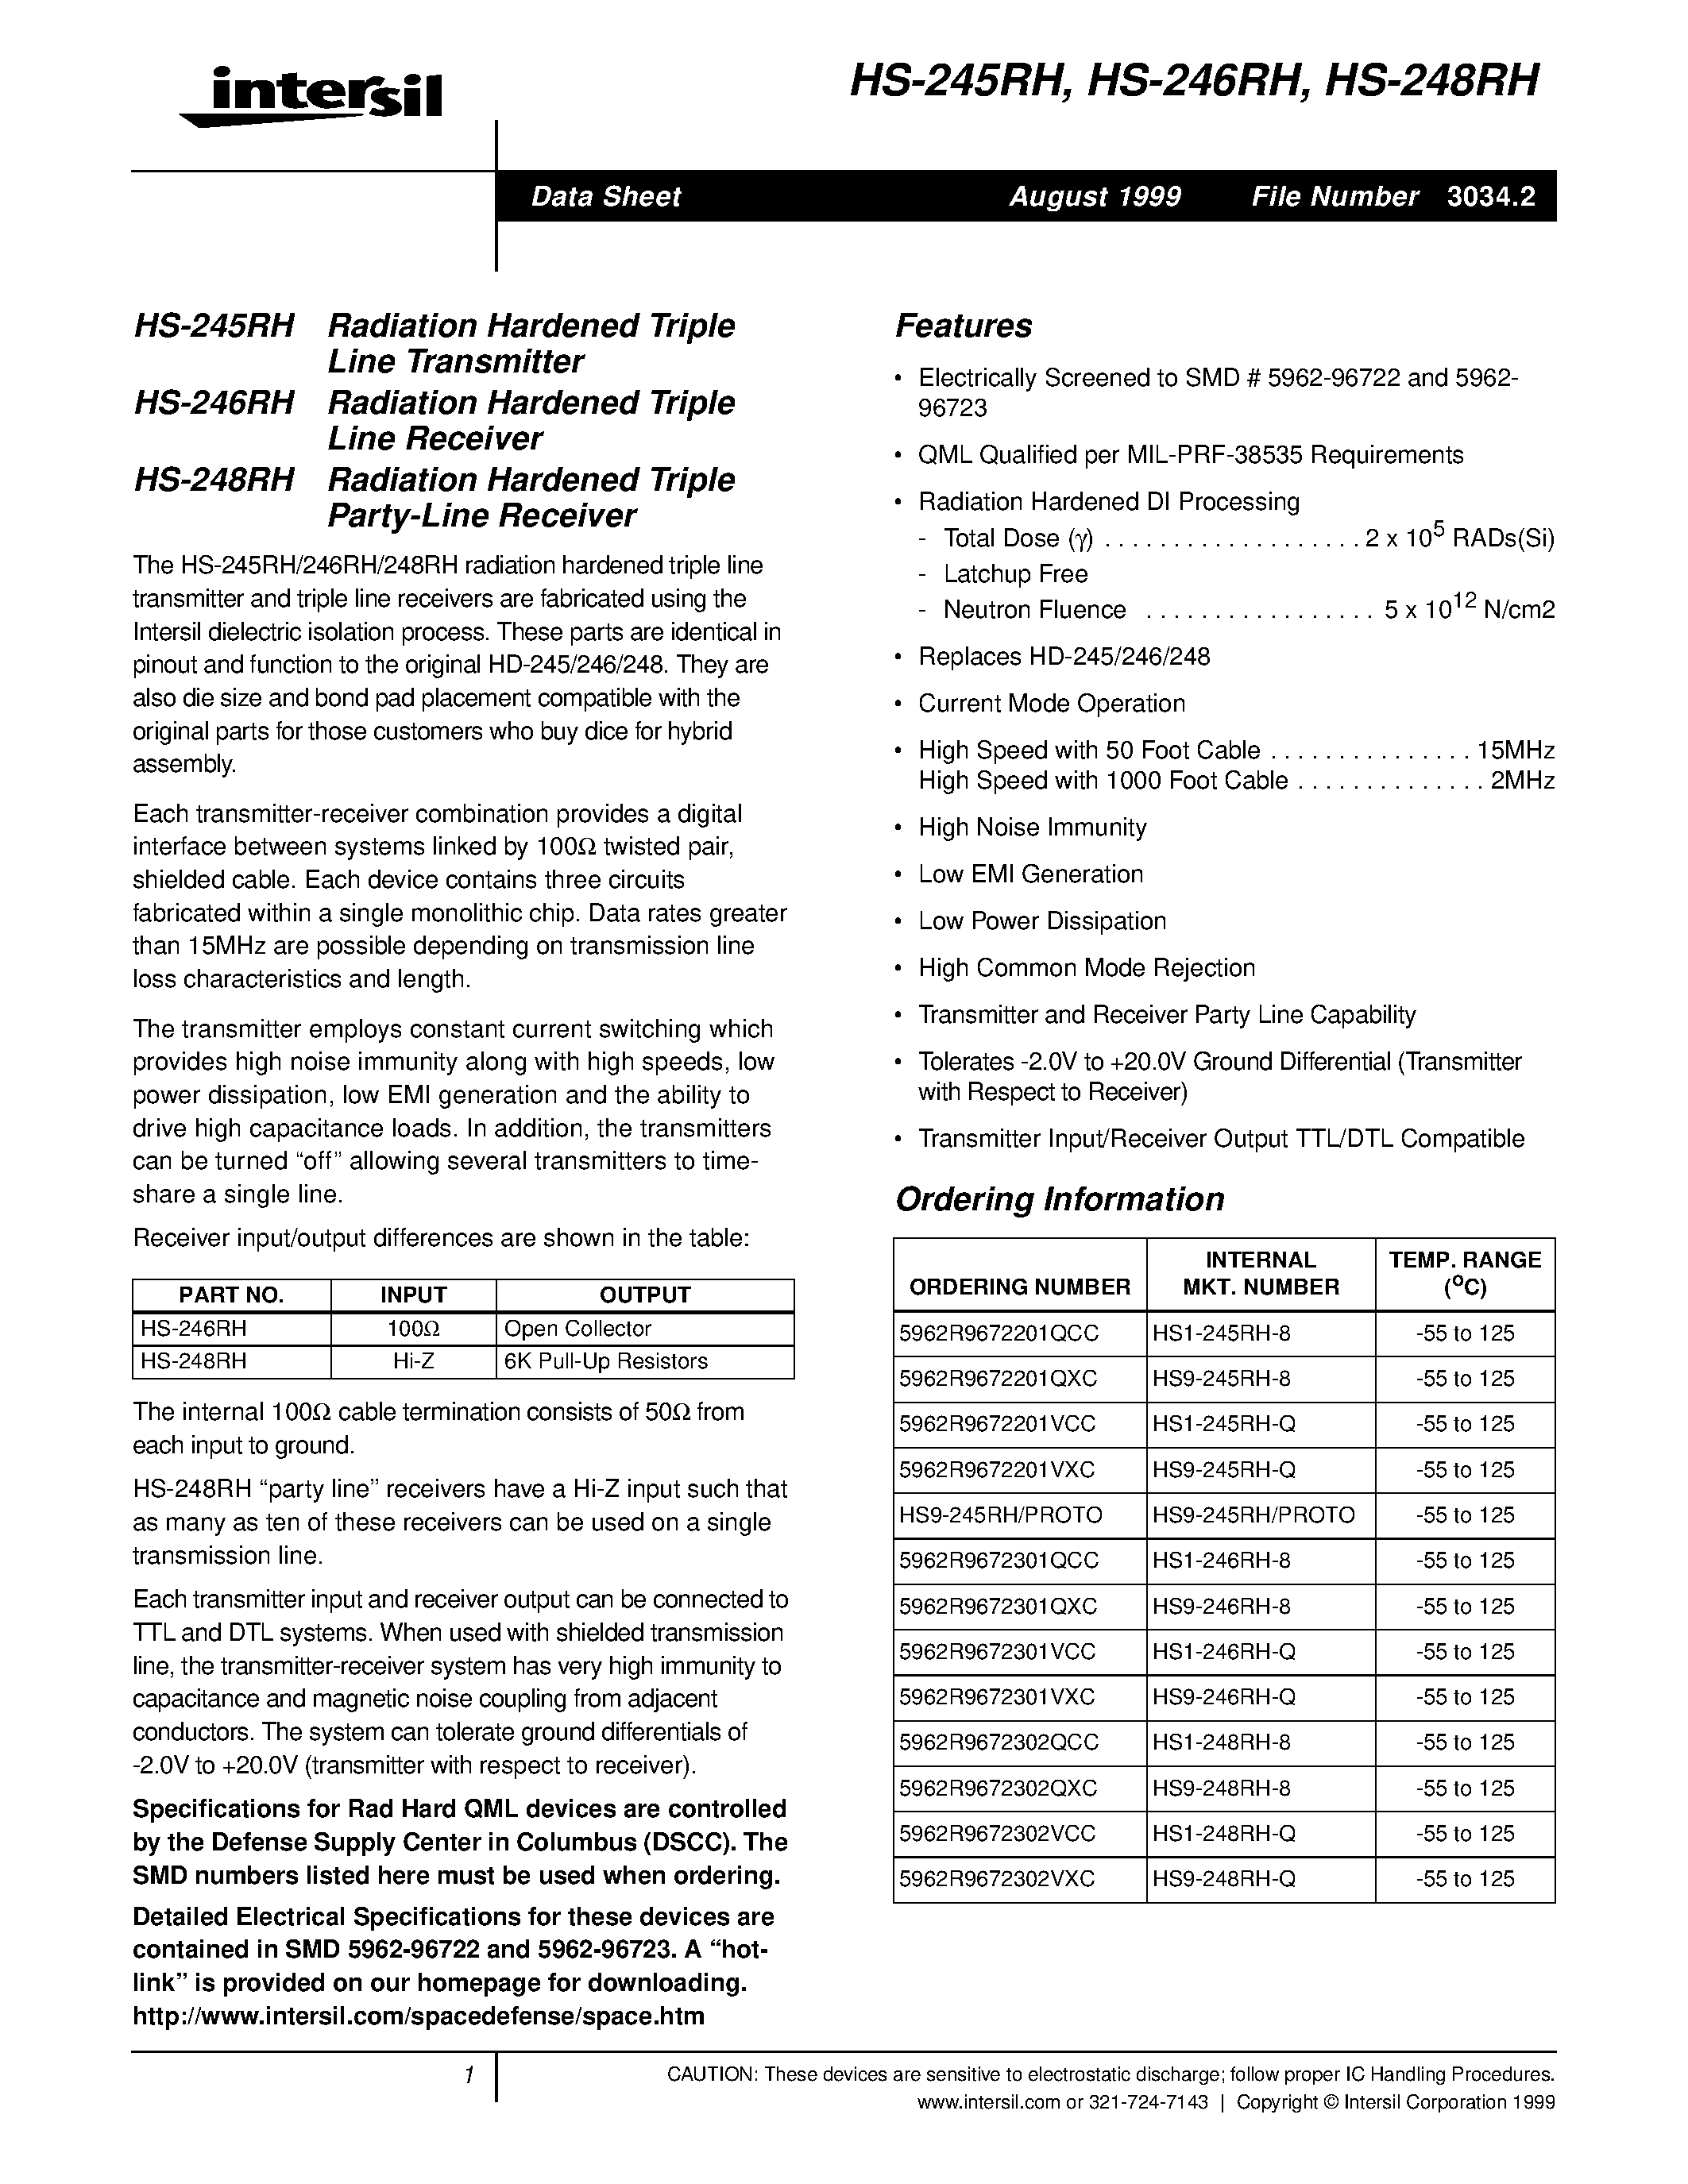 Даташит HS9-248RH-8 - Radiation Hardened Triple Line(party-Line) Transmitter страница 1